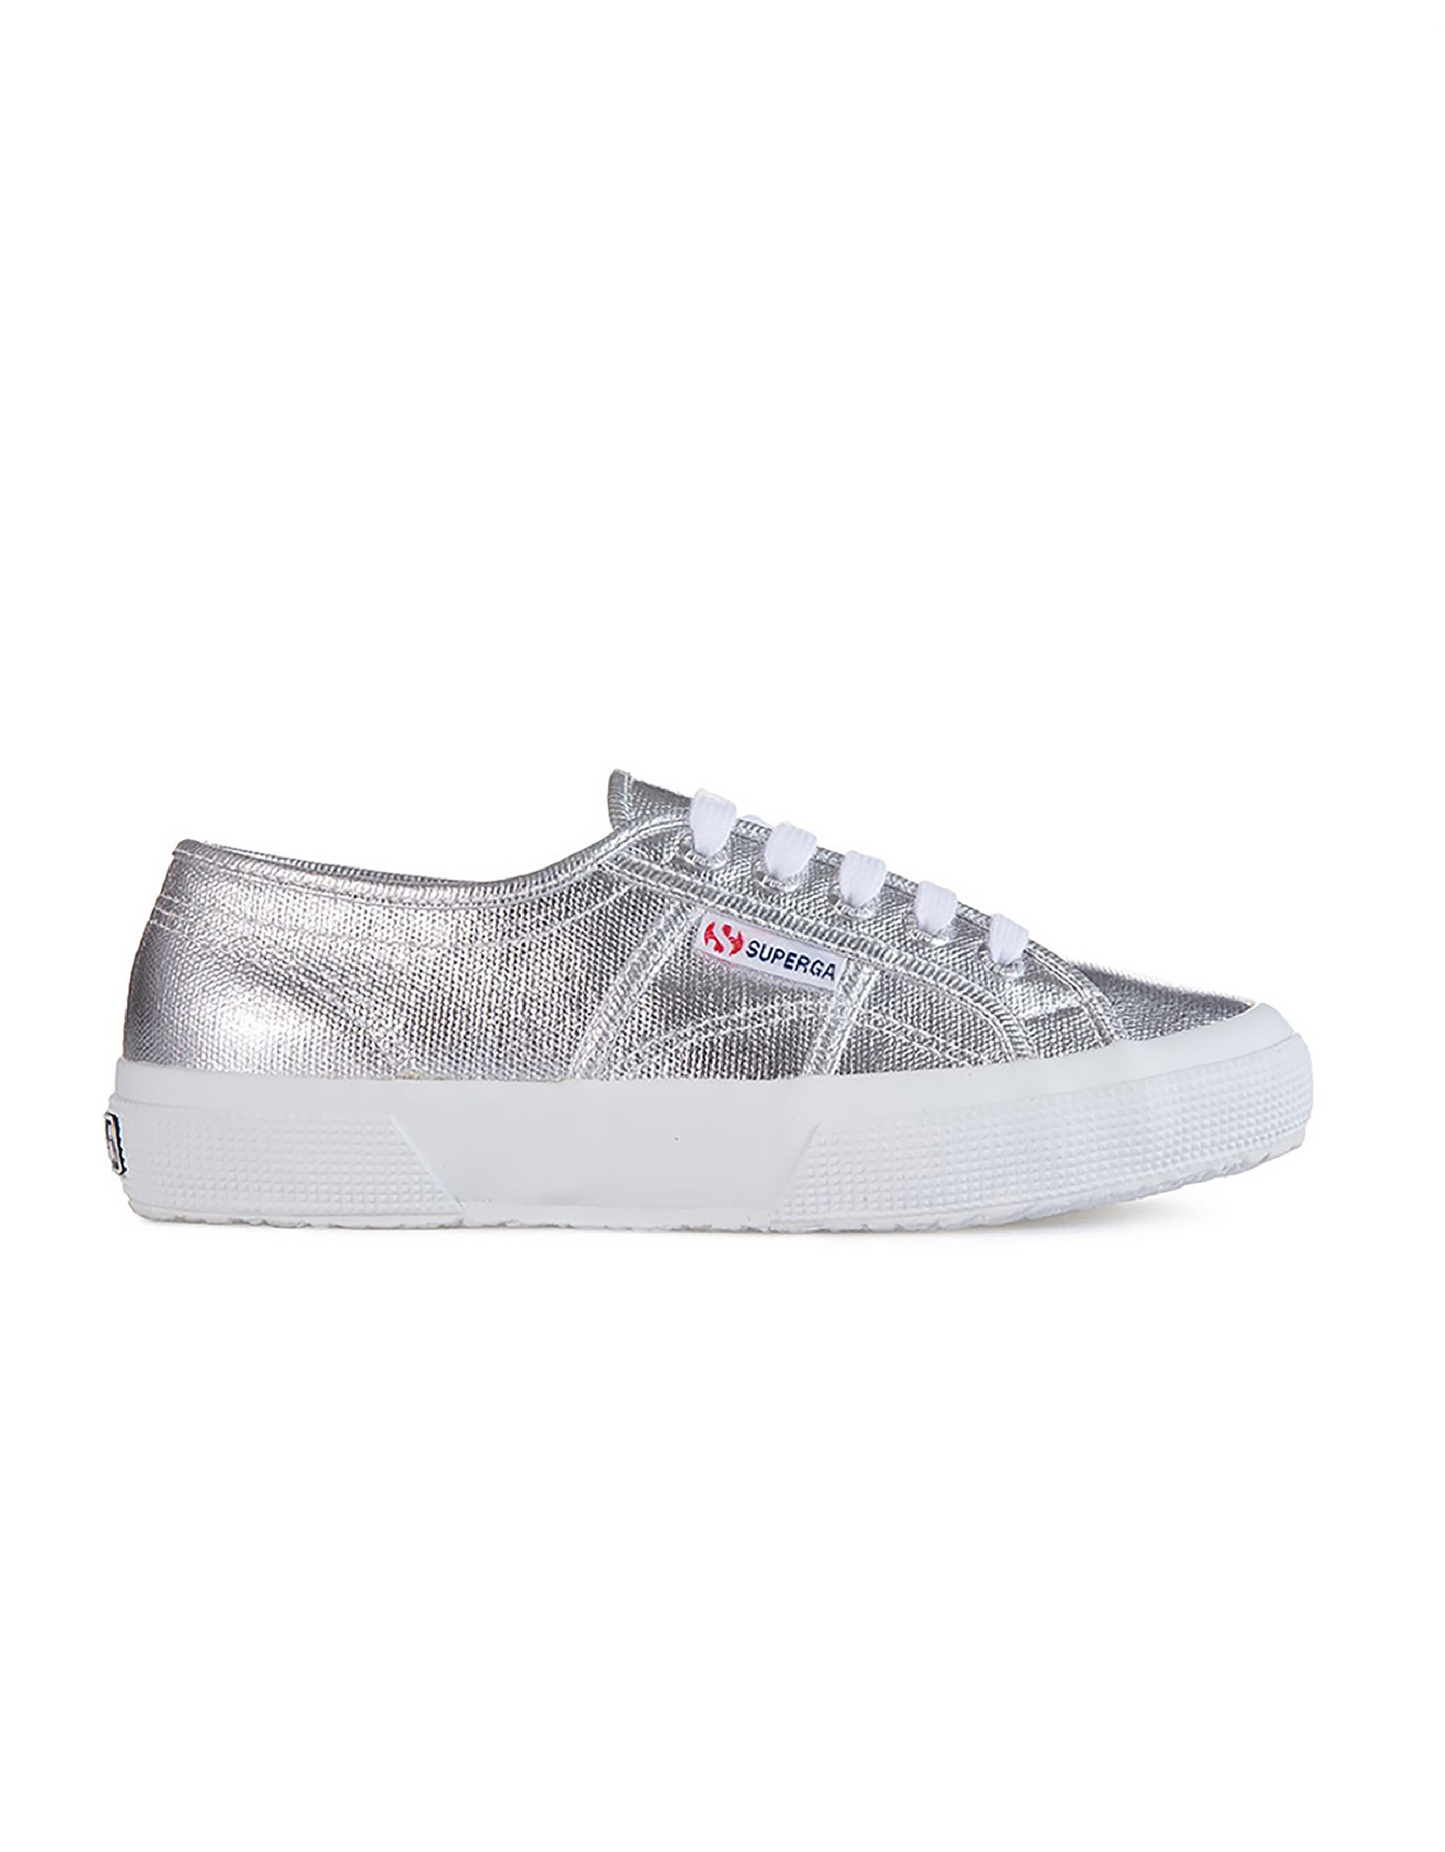 Superga Metallic Canvas Shoe 031GRY Grey Silver